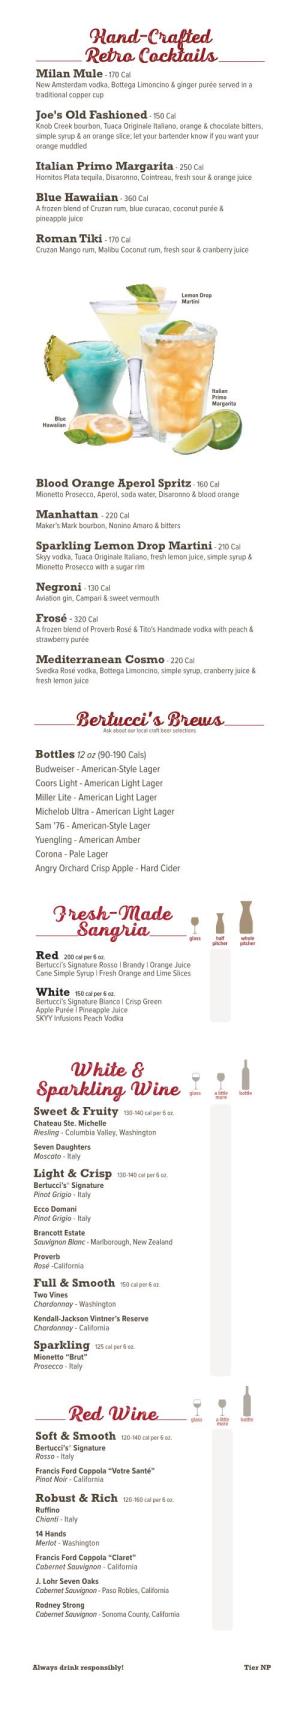 Hand-Crafted Retro Cocktails Bertucci's Brews Fresh-Made Sangria White & Sparkling Wine Glass Red Wine